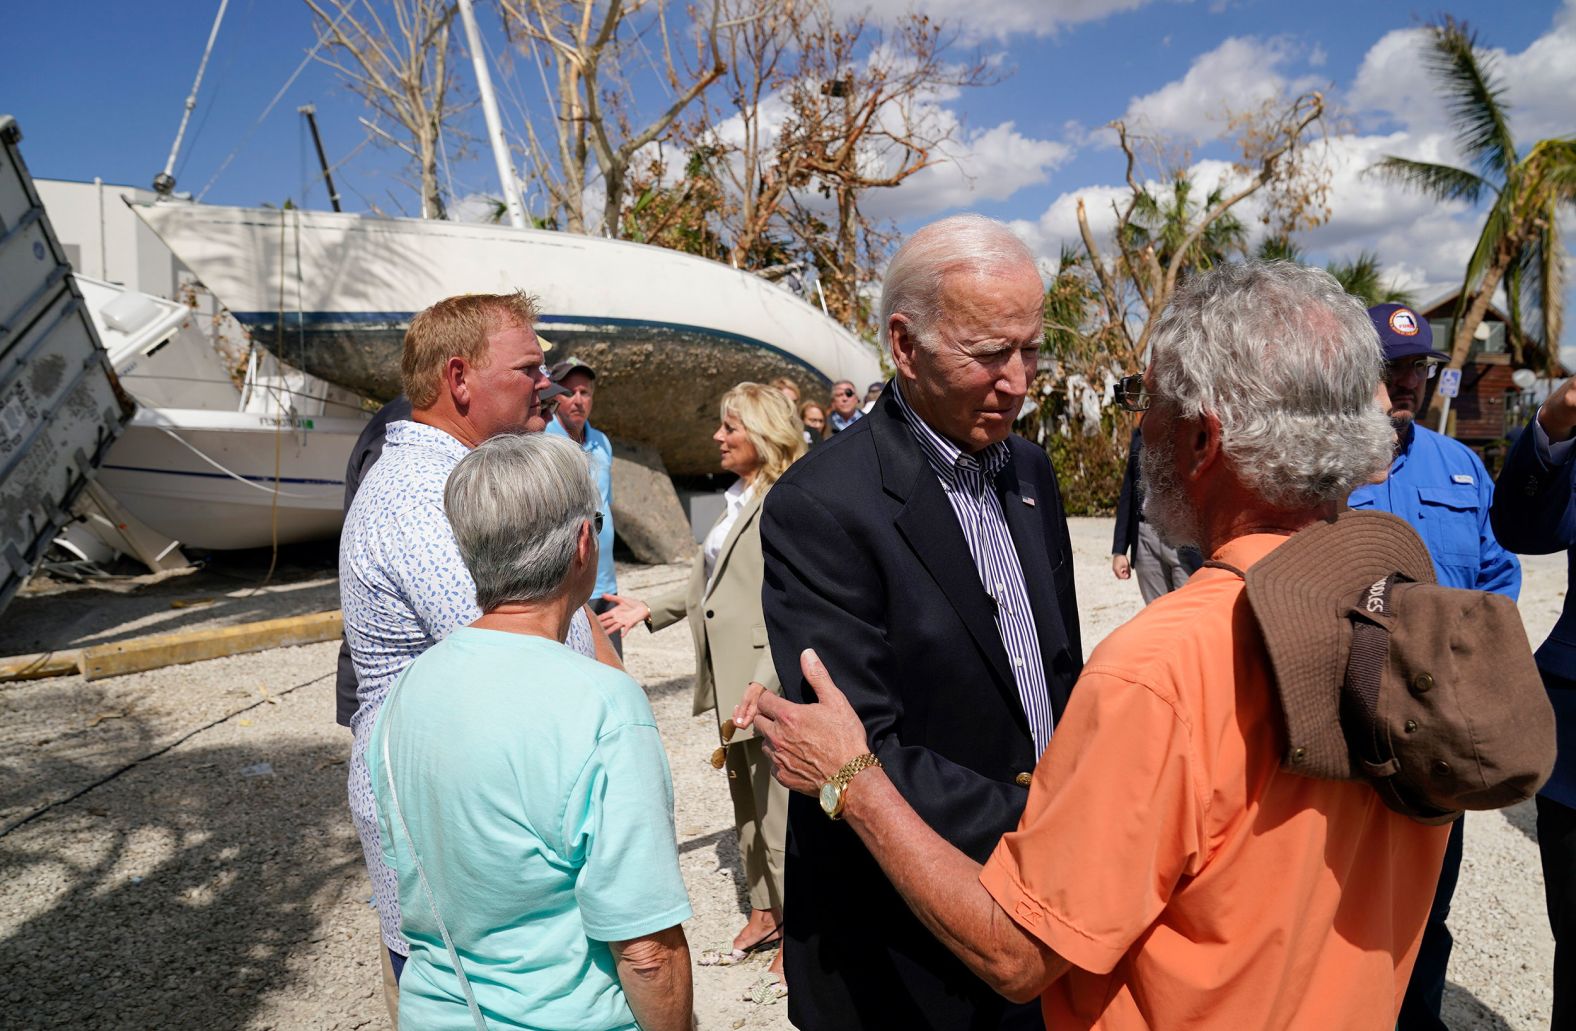 US President Joe Biden talks to people impacted by Hurricane Ian in Fort Myers Beach, Florida, as he <a href="https://www.cnn.com/2022/10/05/politics/joe-biden-ron-desantis-hurricane-ian" target="_blank">tours the area</a> on Wednesday, October 5.